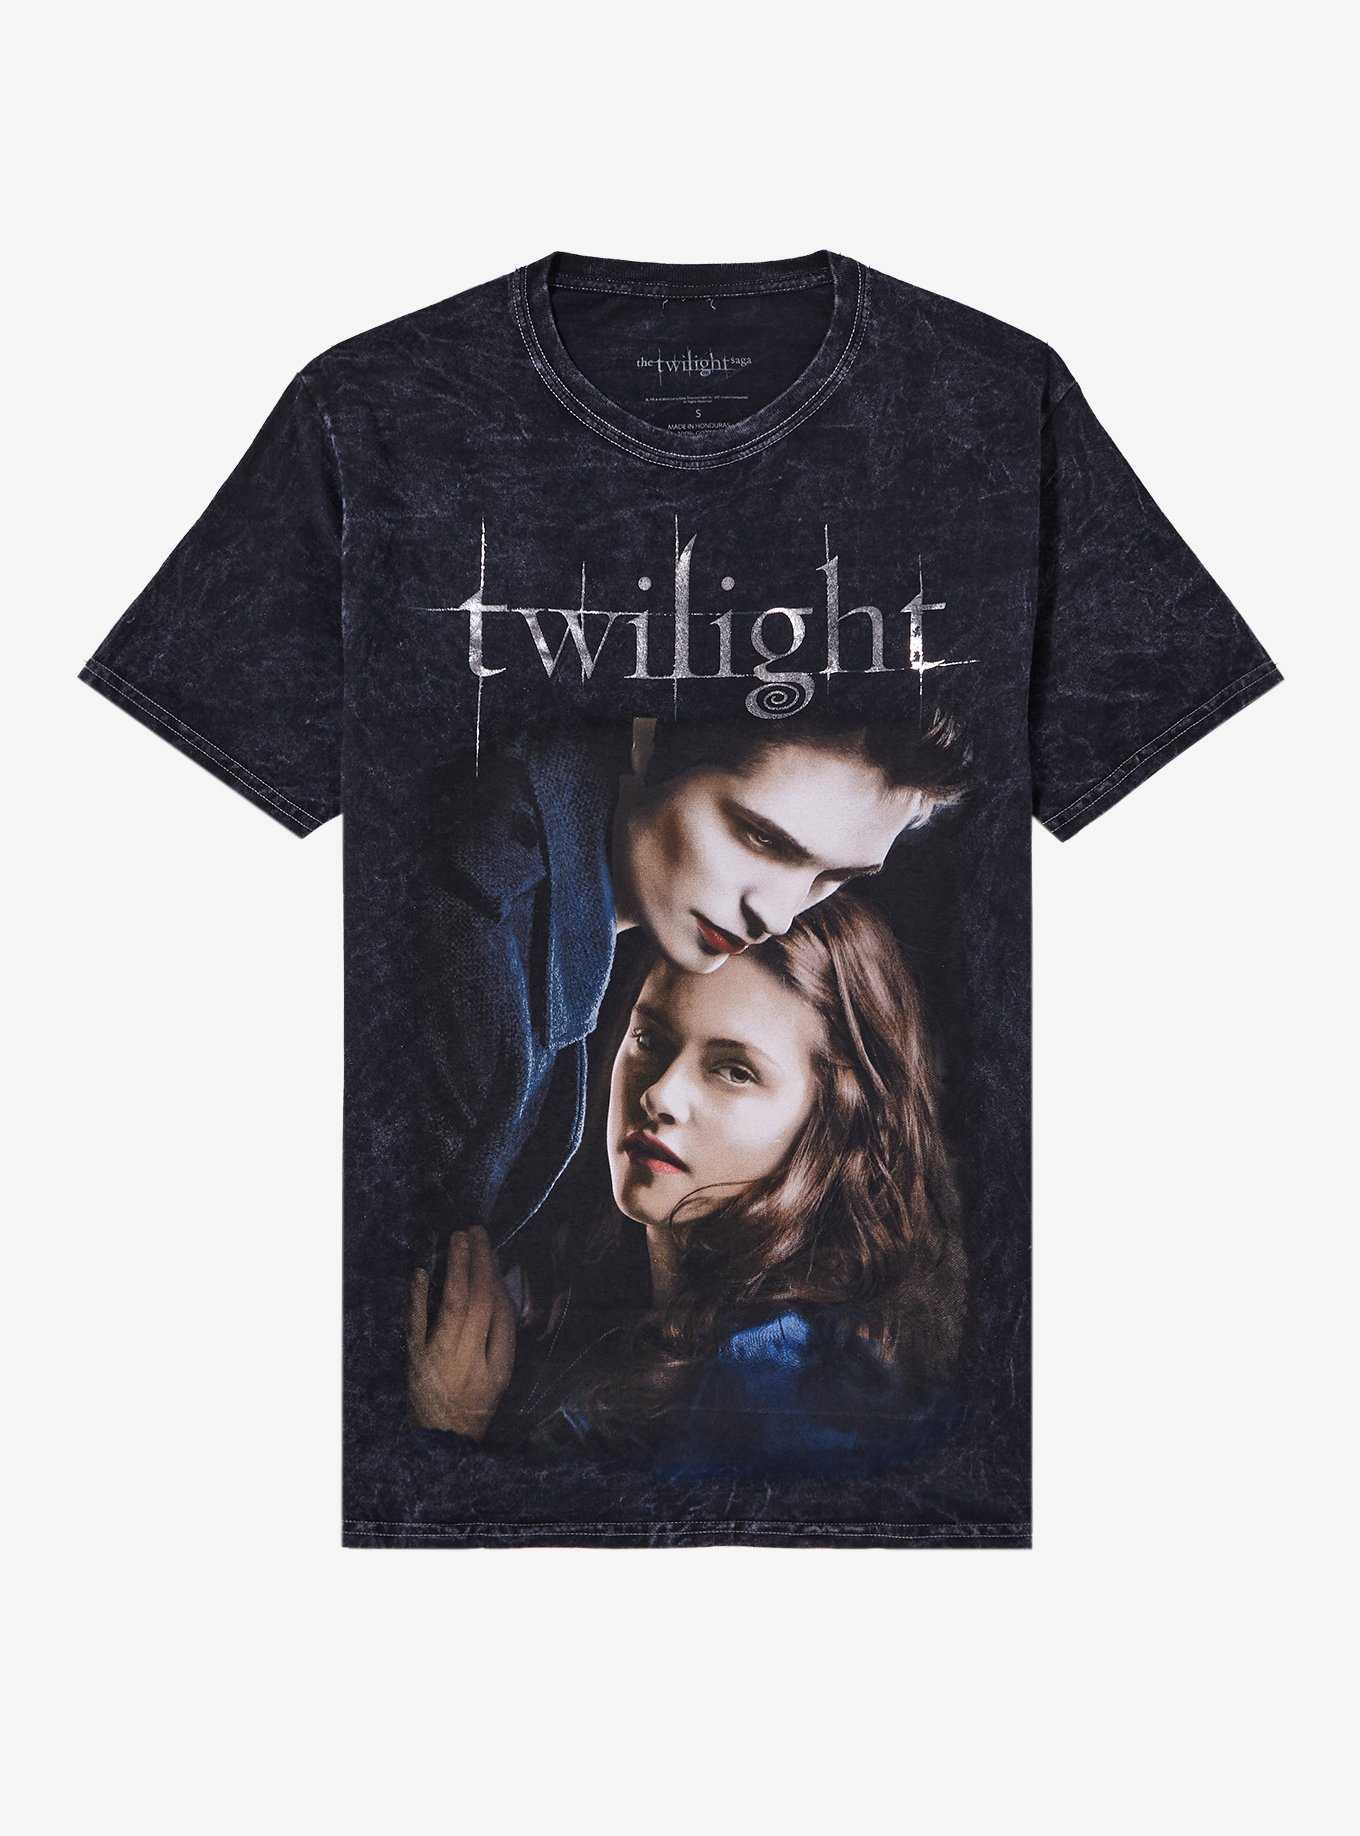 Rare Twilight Movie Promo full cast t shirt new moon breaking dawn vampire  L-XL